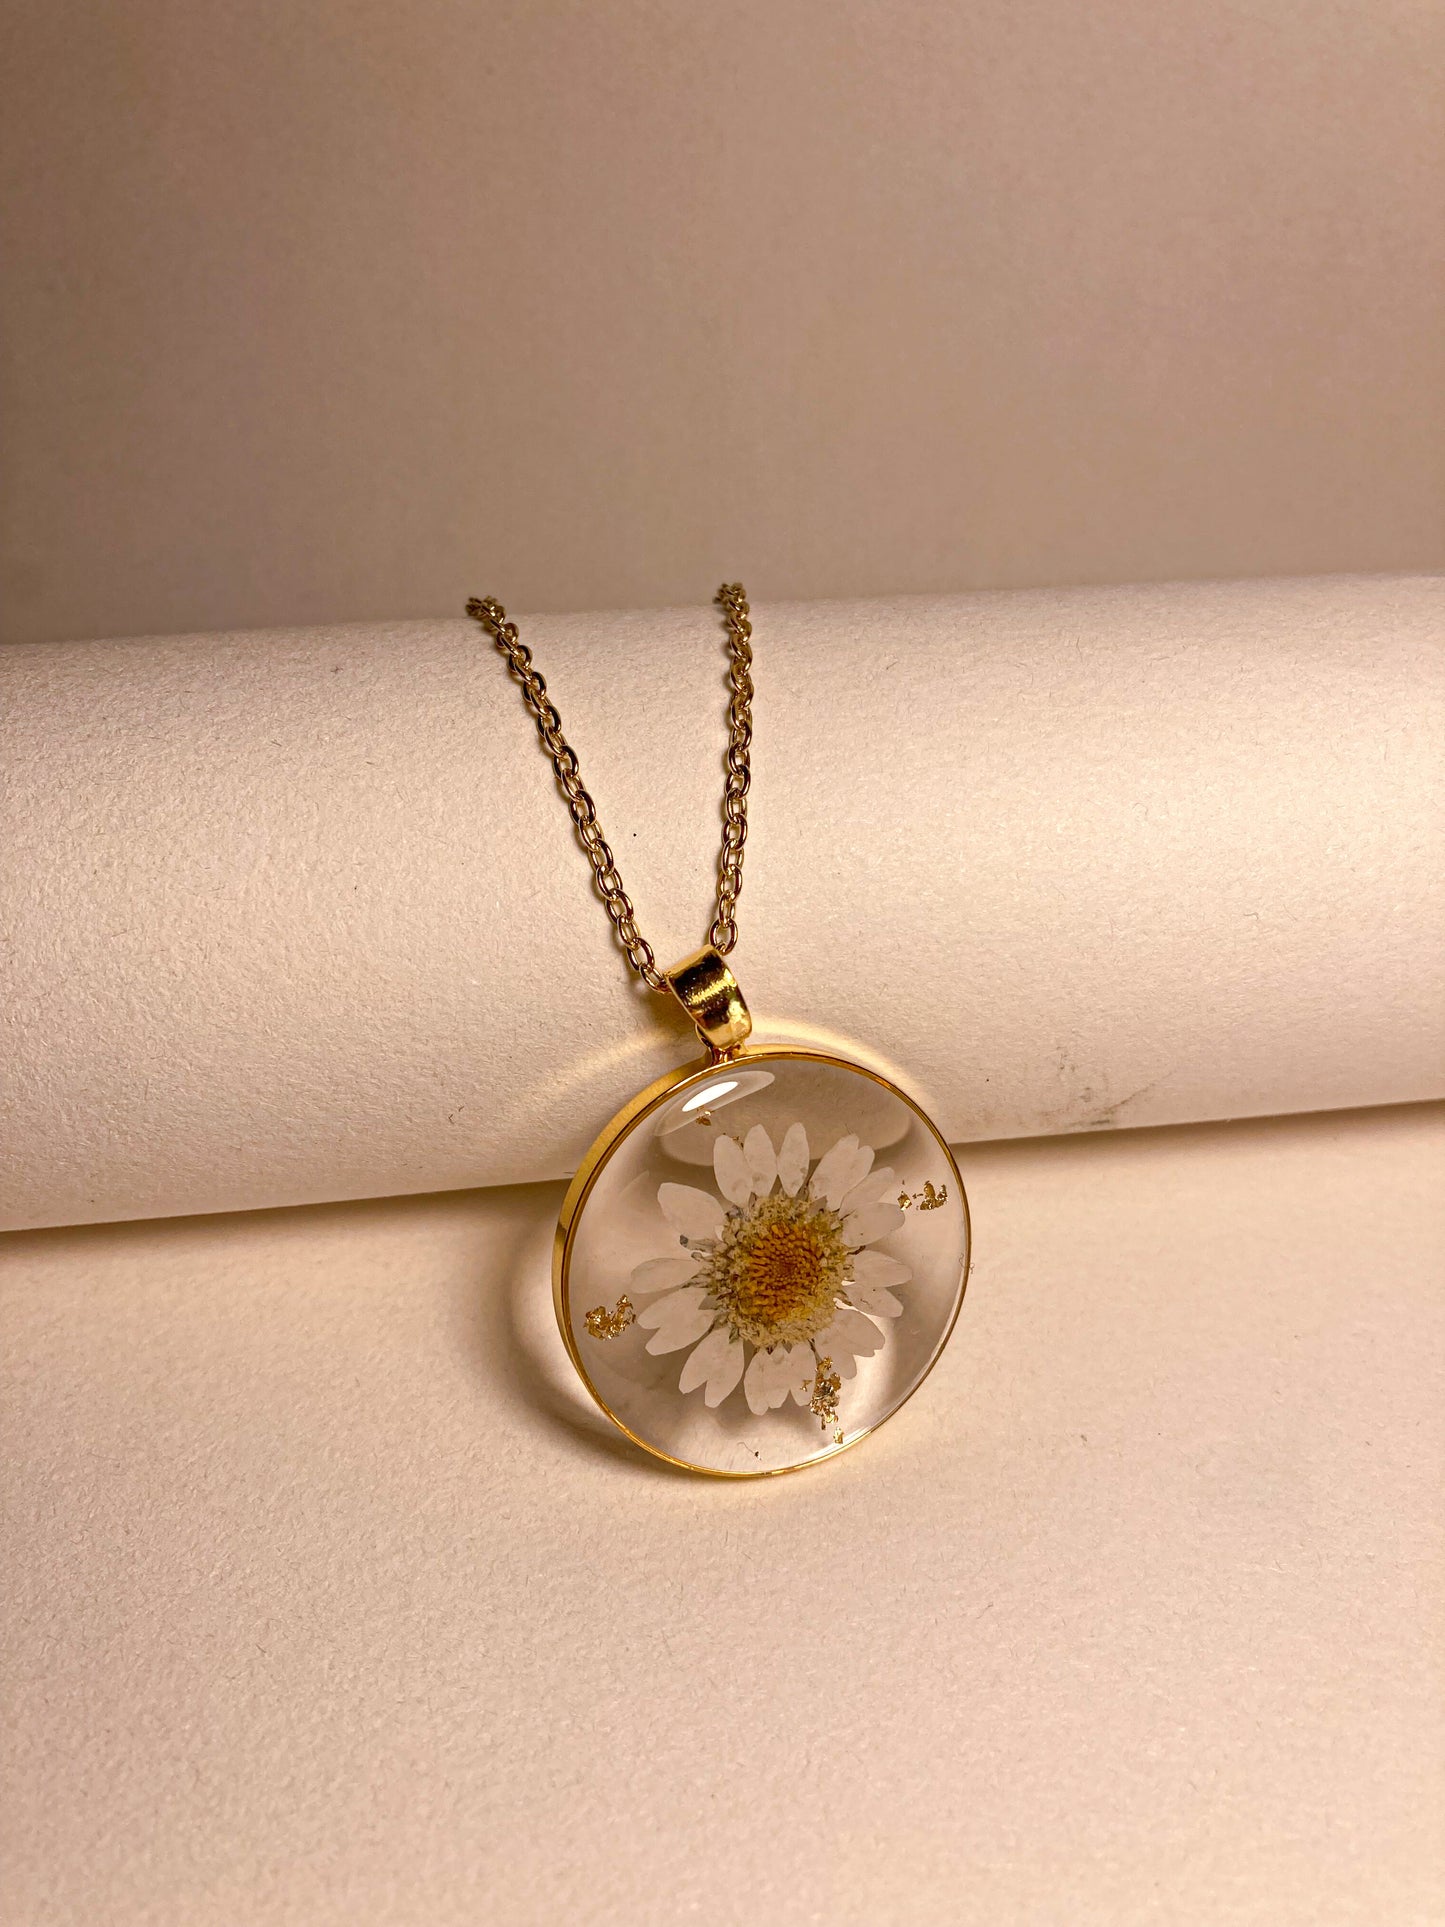 Pressed flower necklace - White Flower